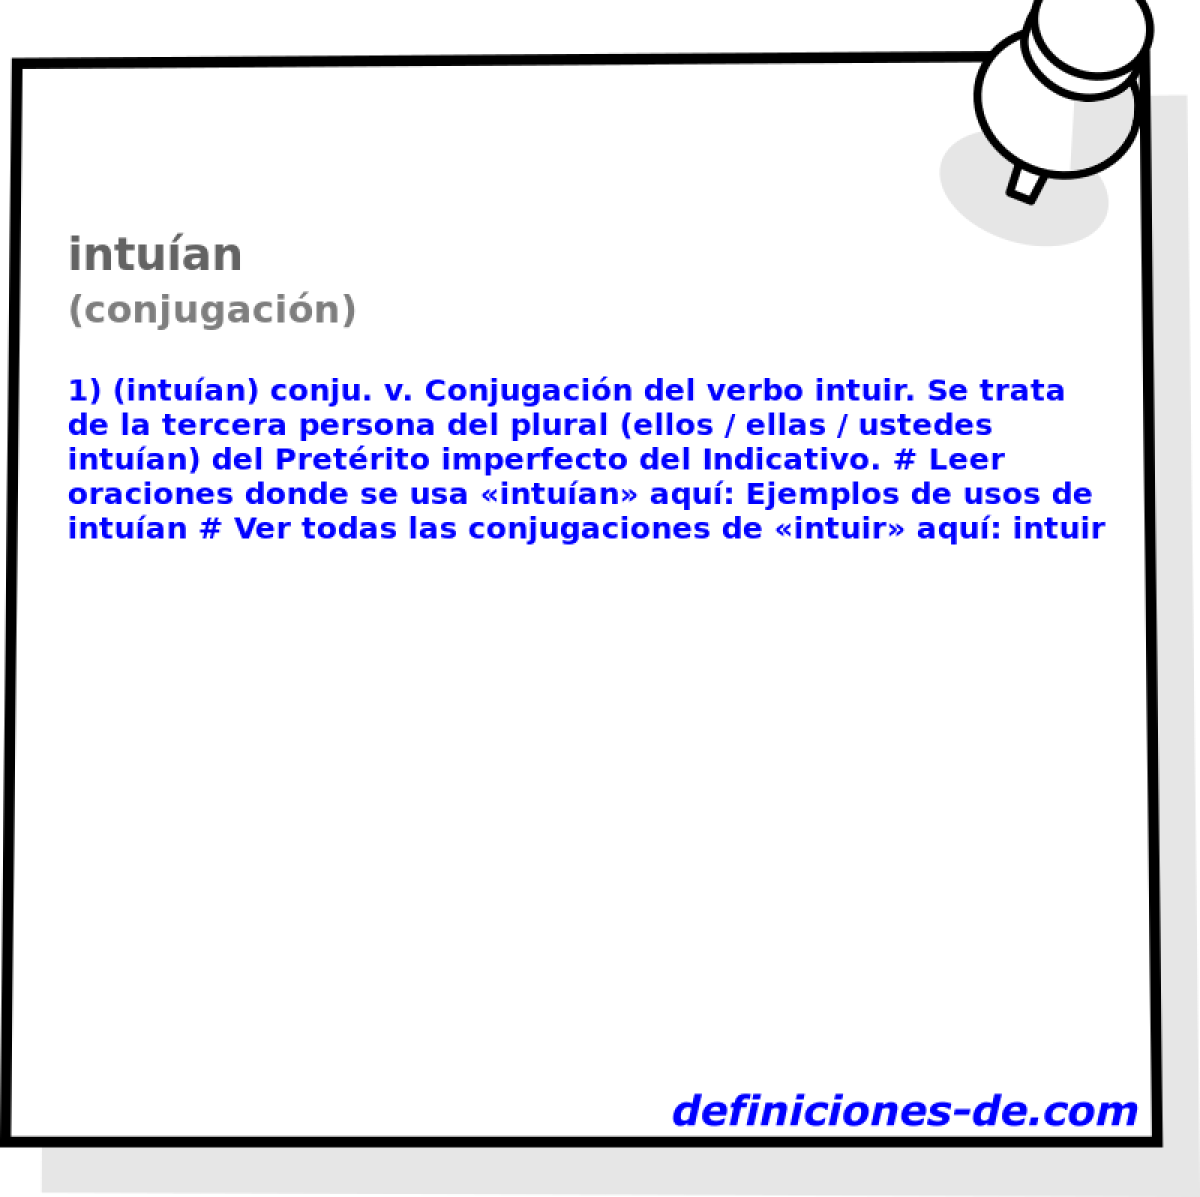 intuan (conjugacin)